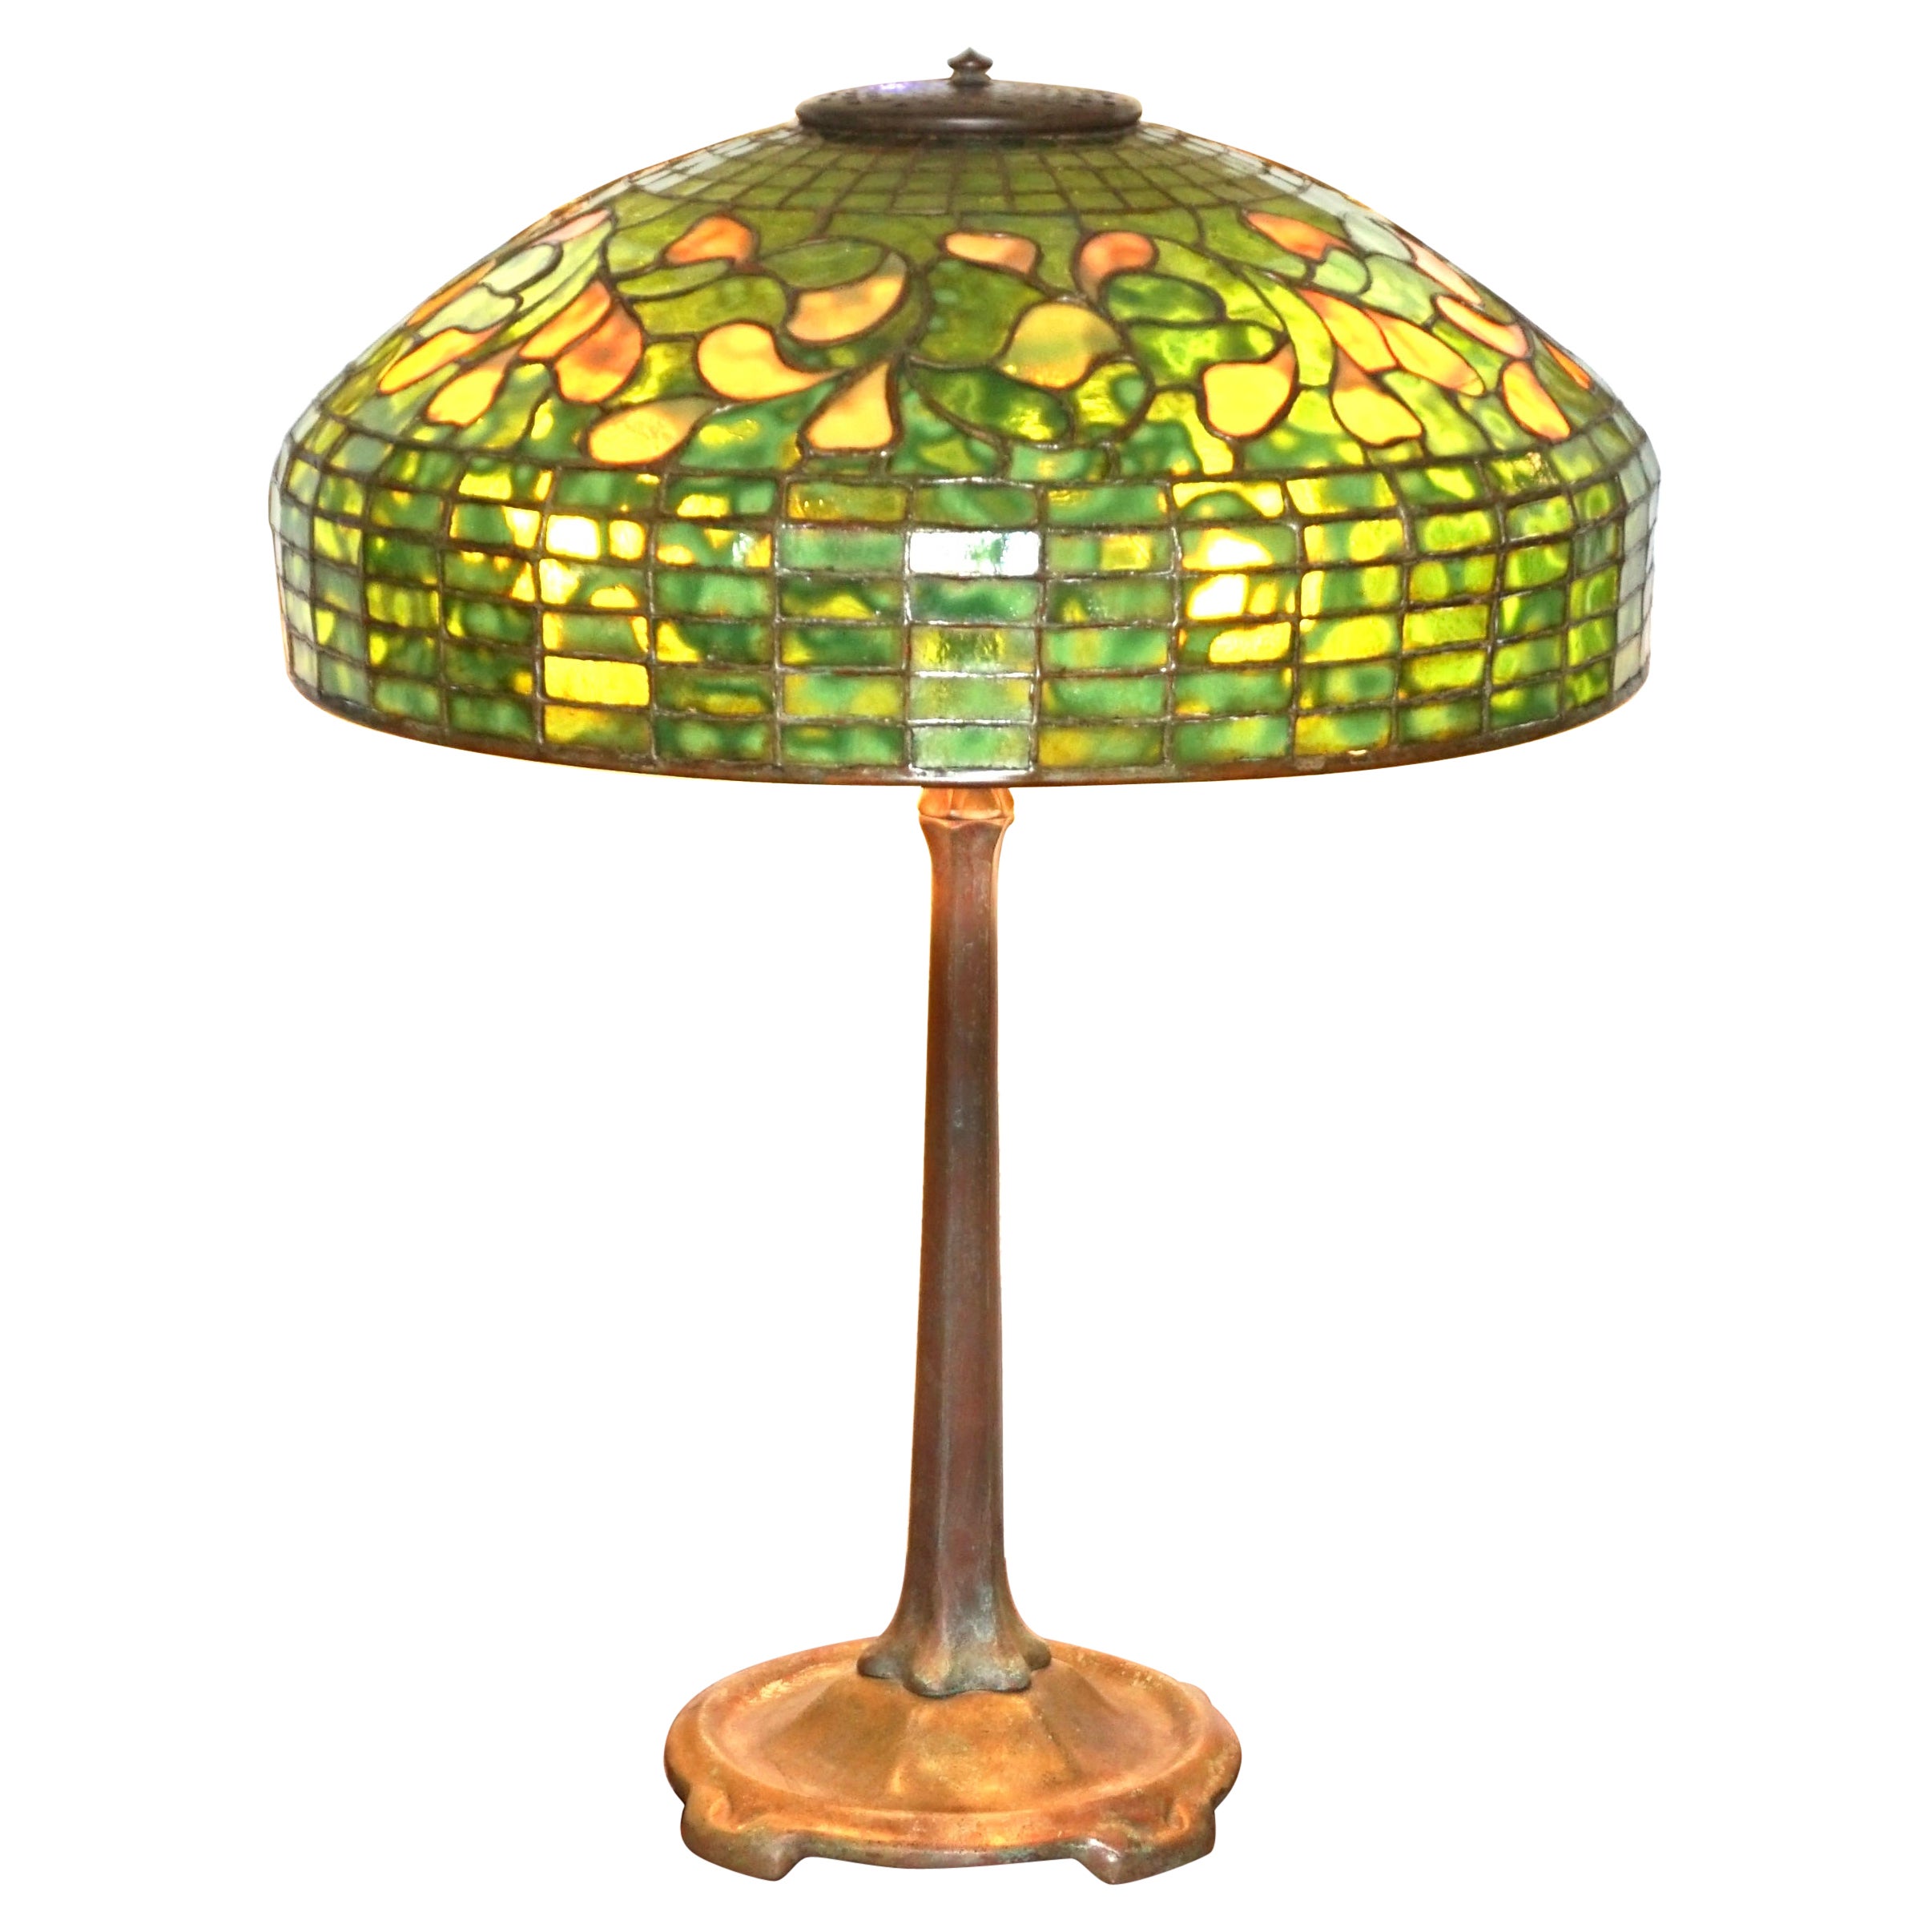 Tiffany Studios - Lampe de table à feuilles de citronnier tourbillonnantes